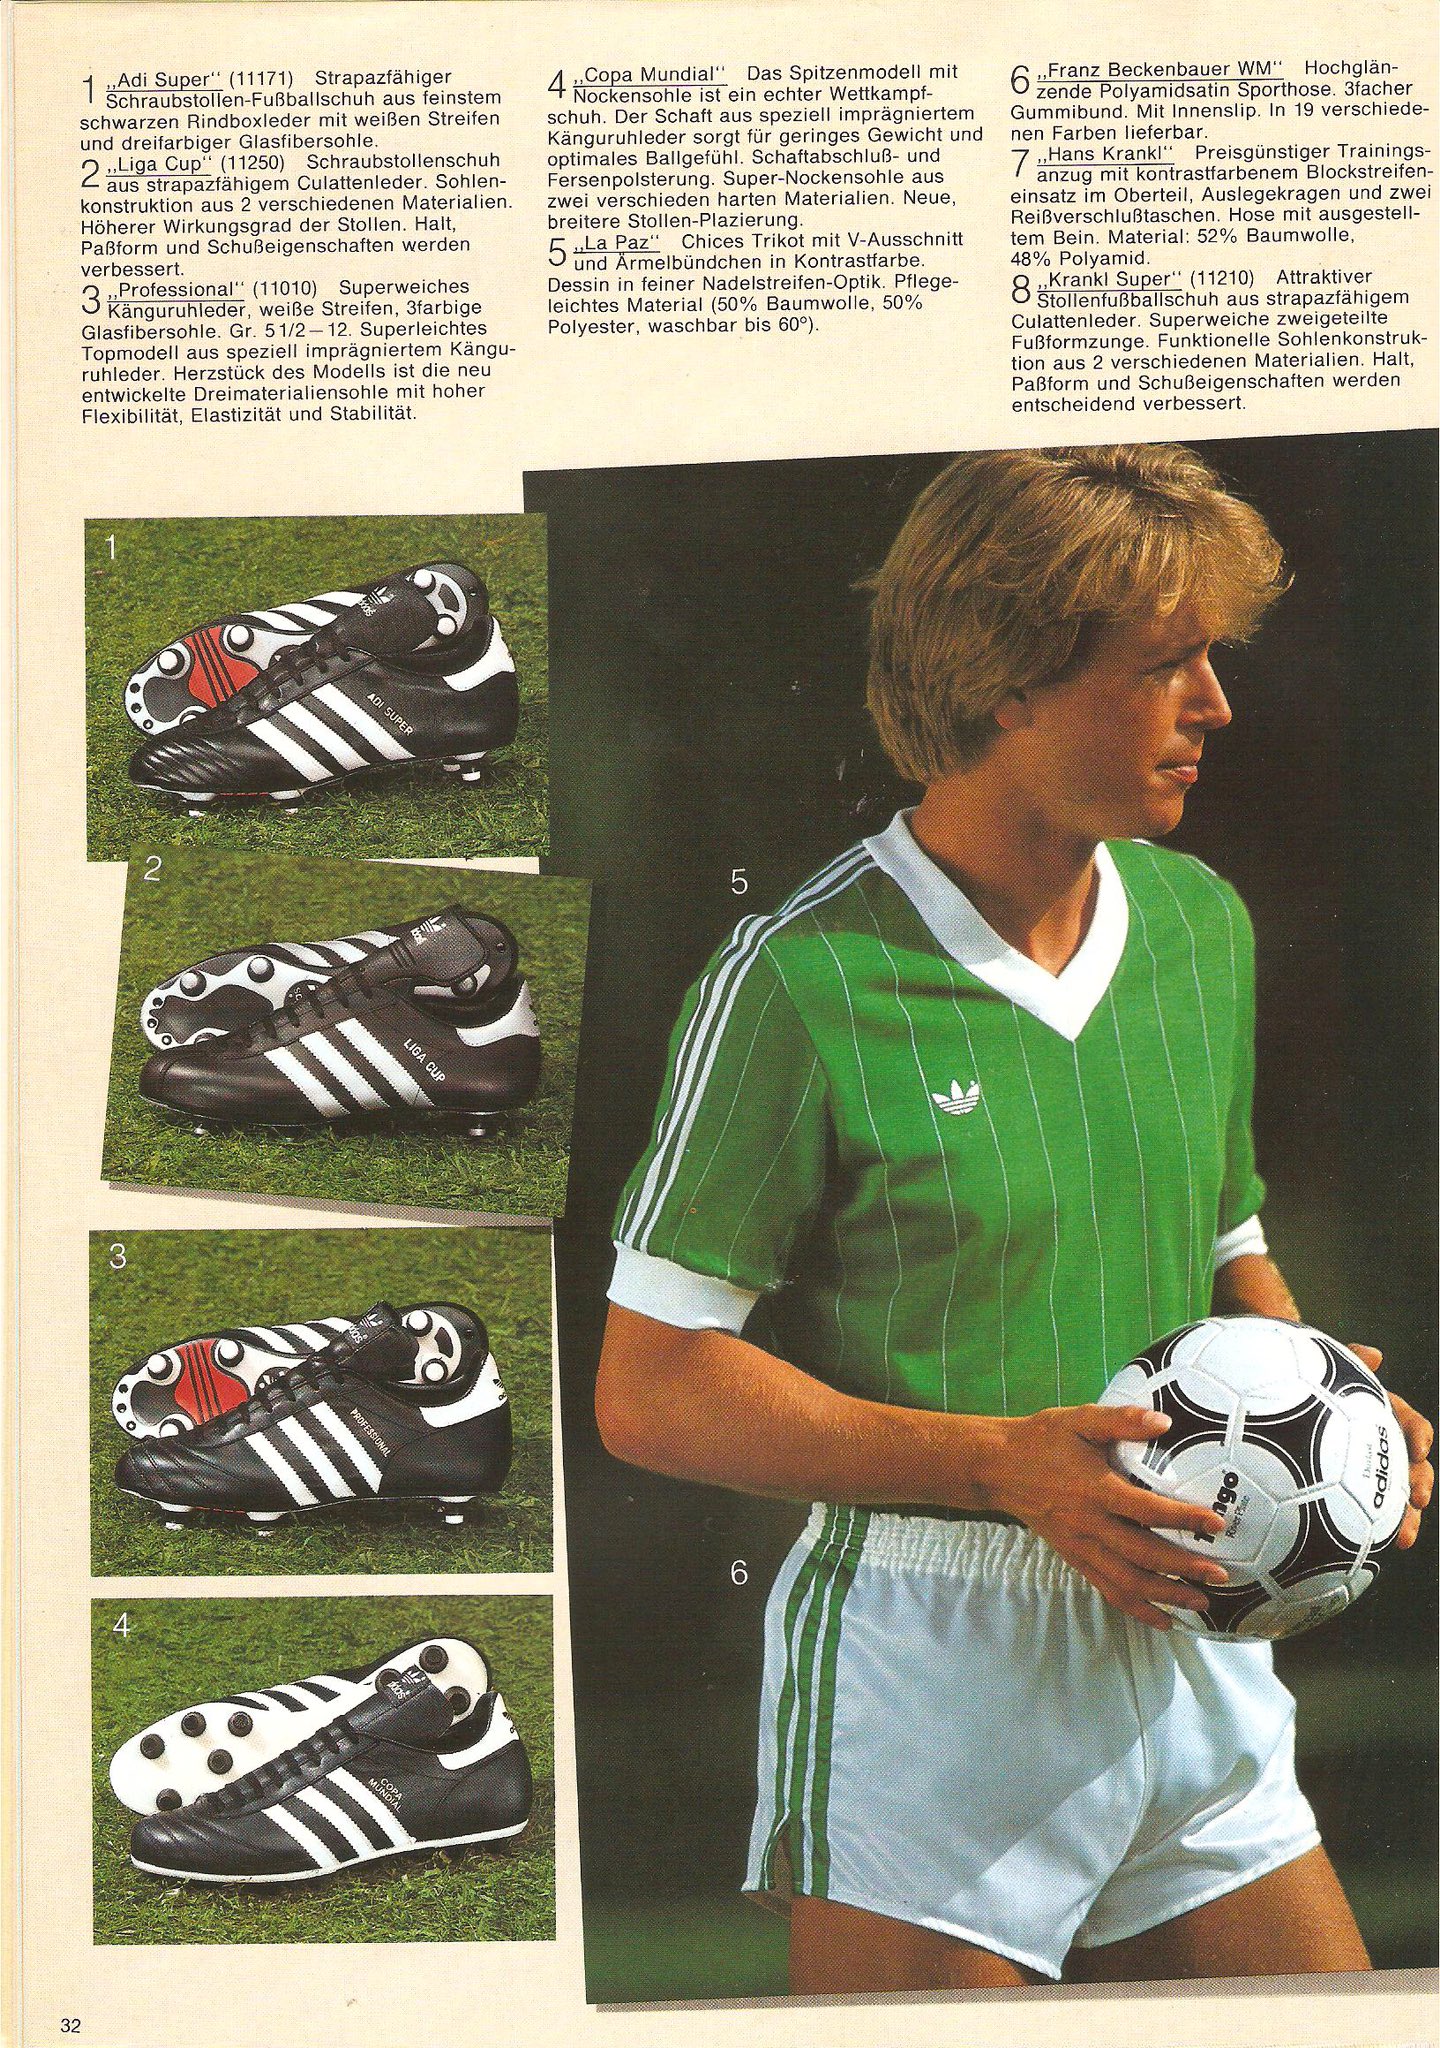 Afwezigheid Beperkt inhoud 1983 Adidas Catalogue Pages - Football Shirt Culture - Latest Football Kit  News and More